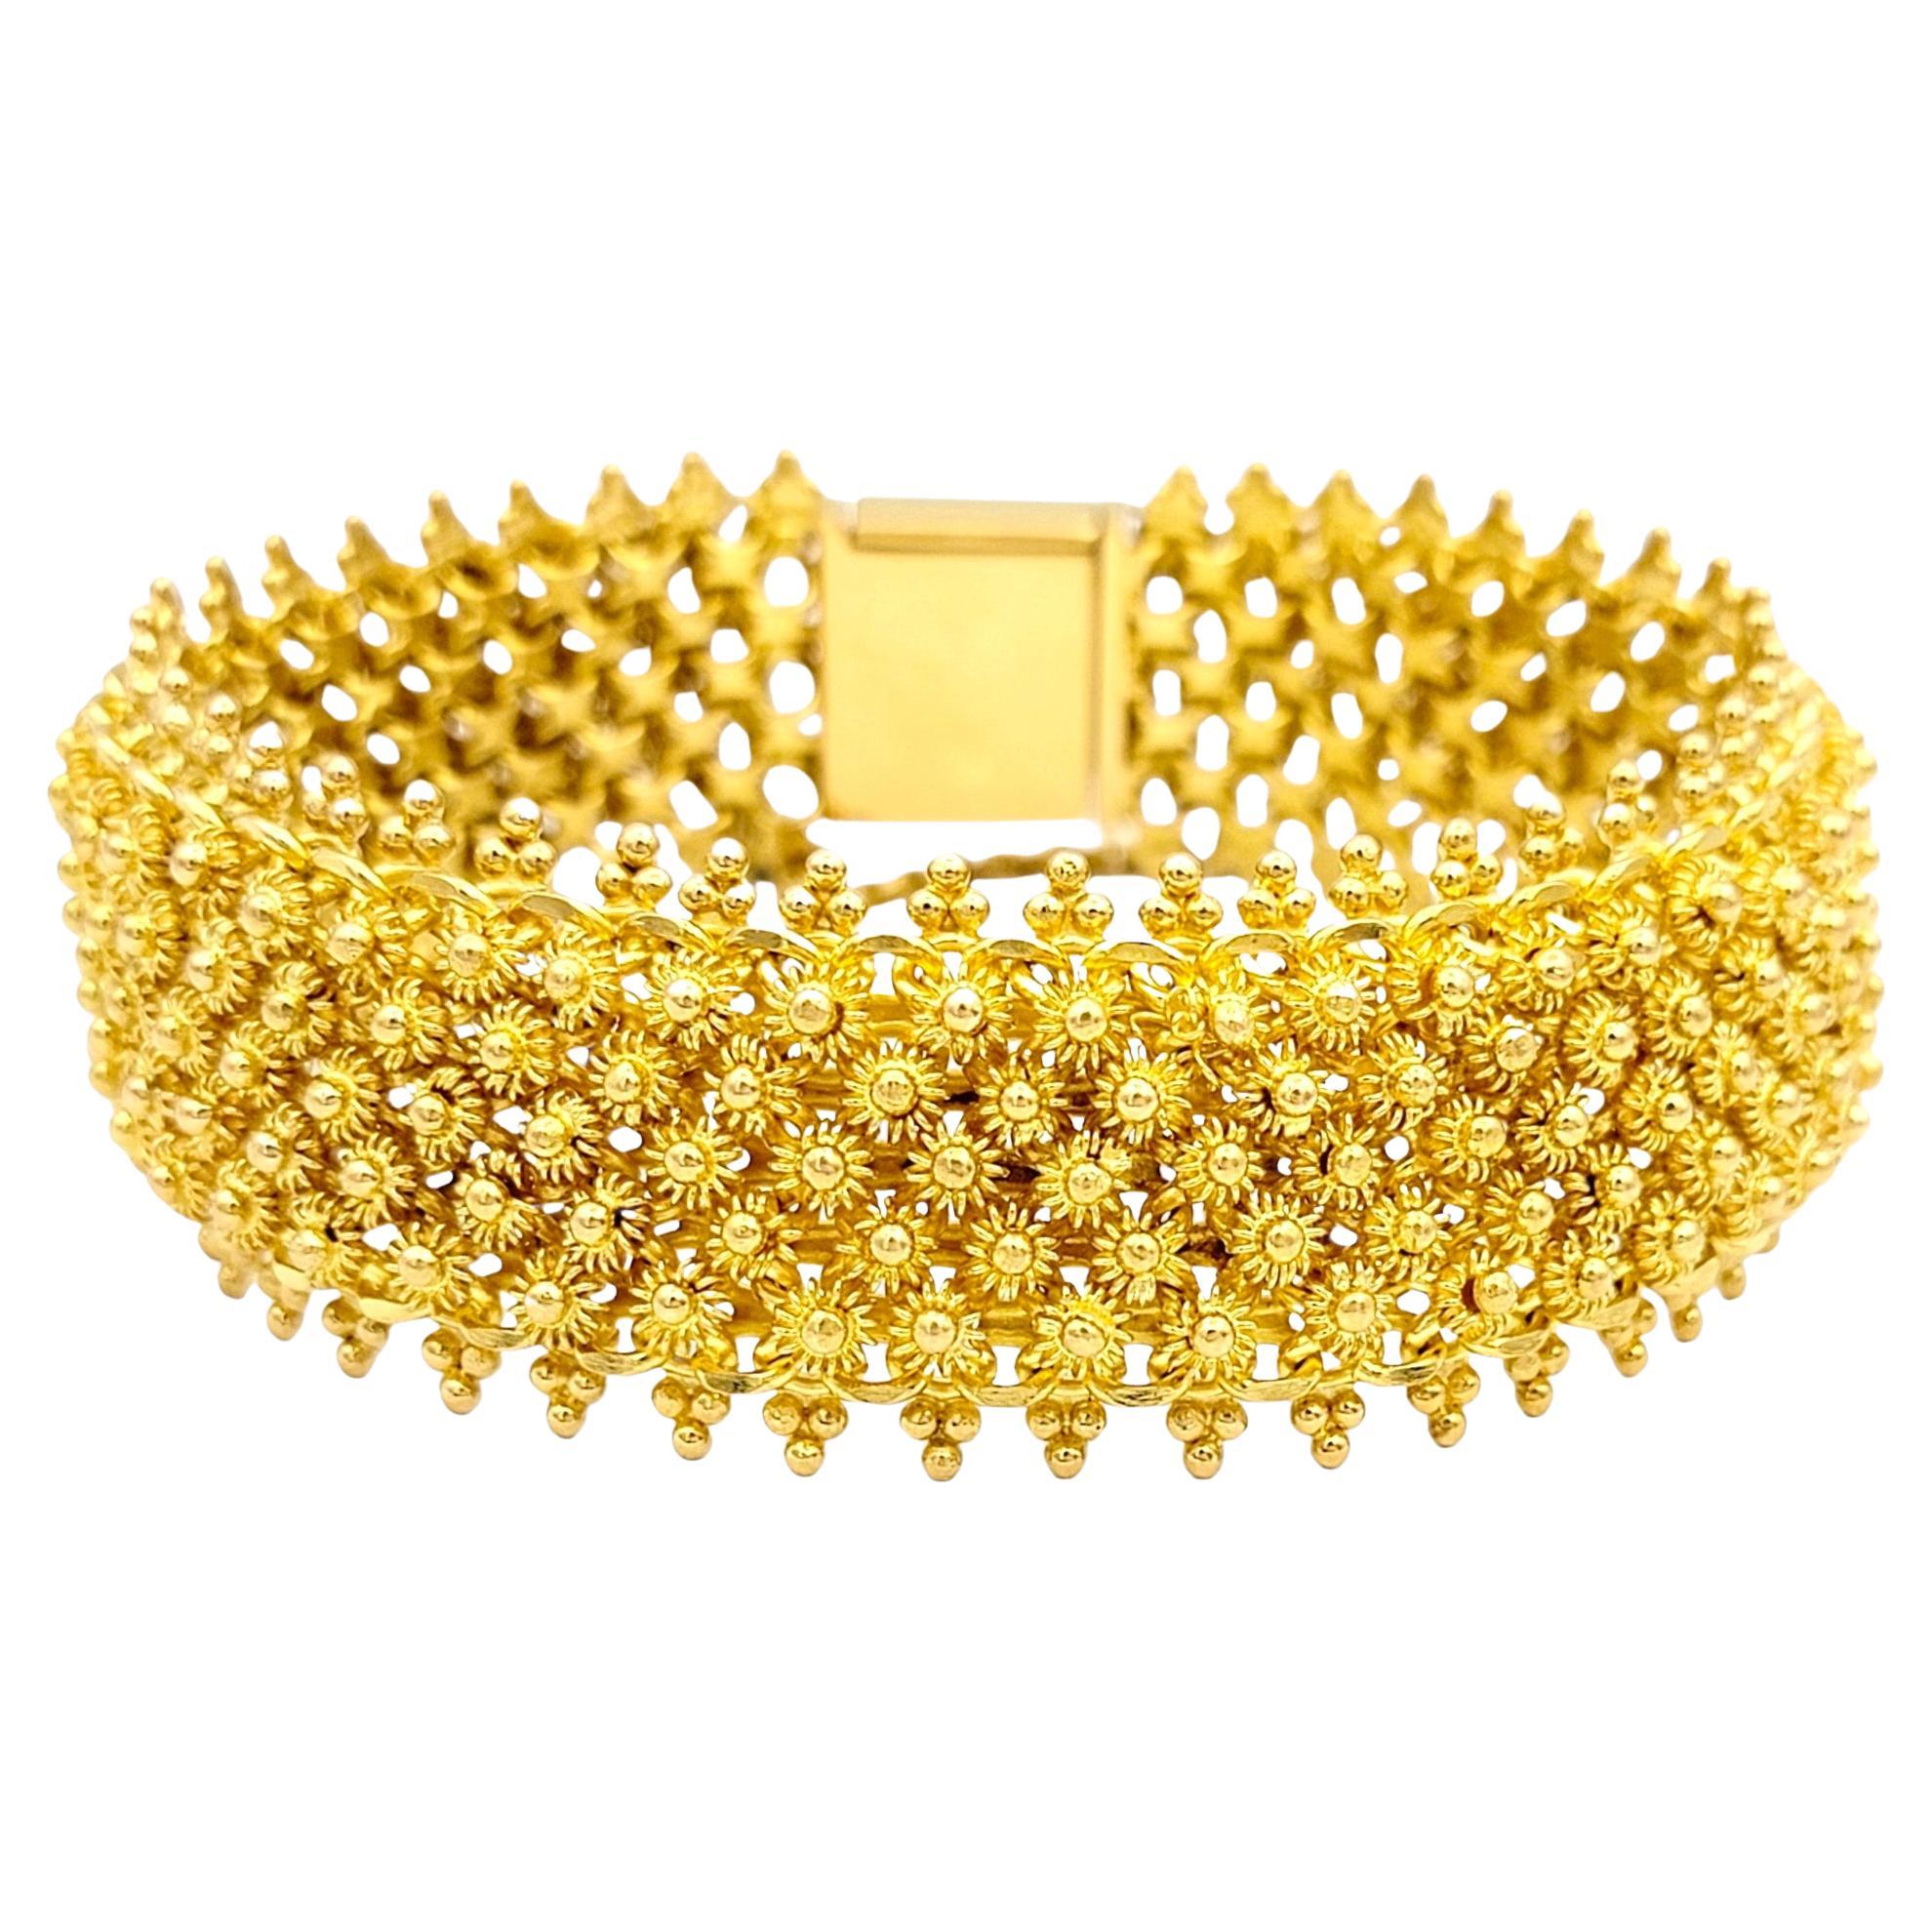 22 Karat Yellow Gold Flexible Cuff Style Bracelet with Granulated Design 